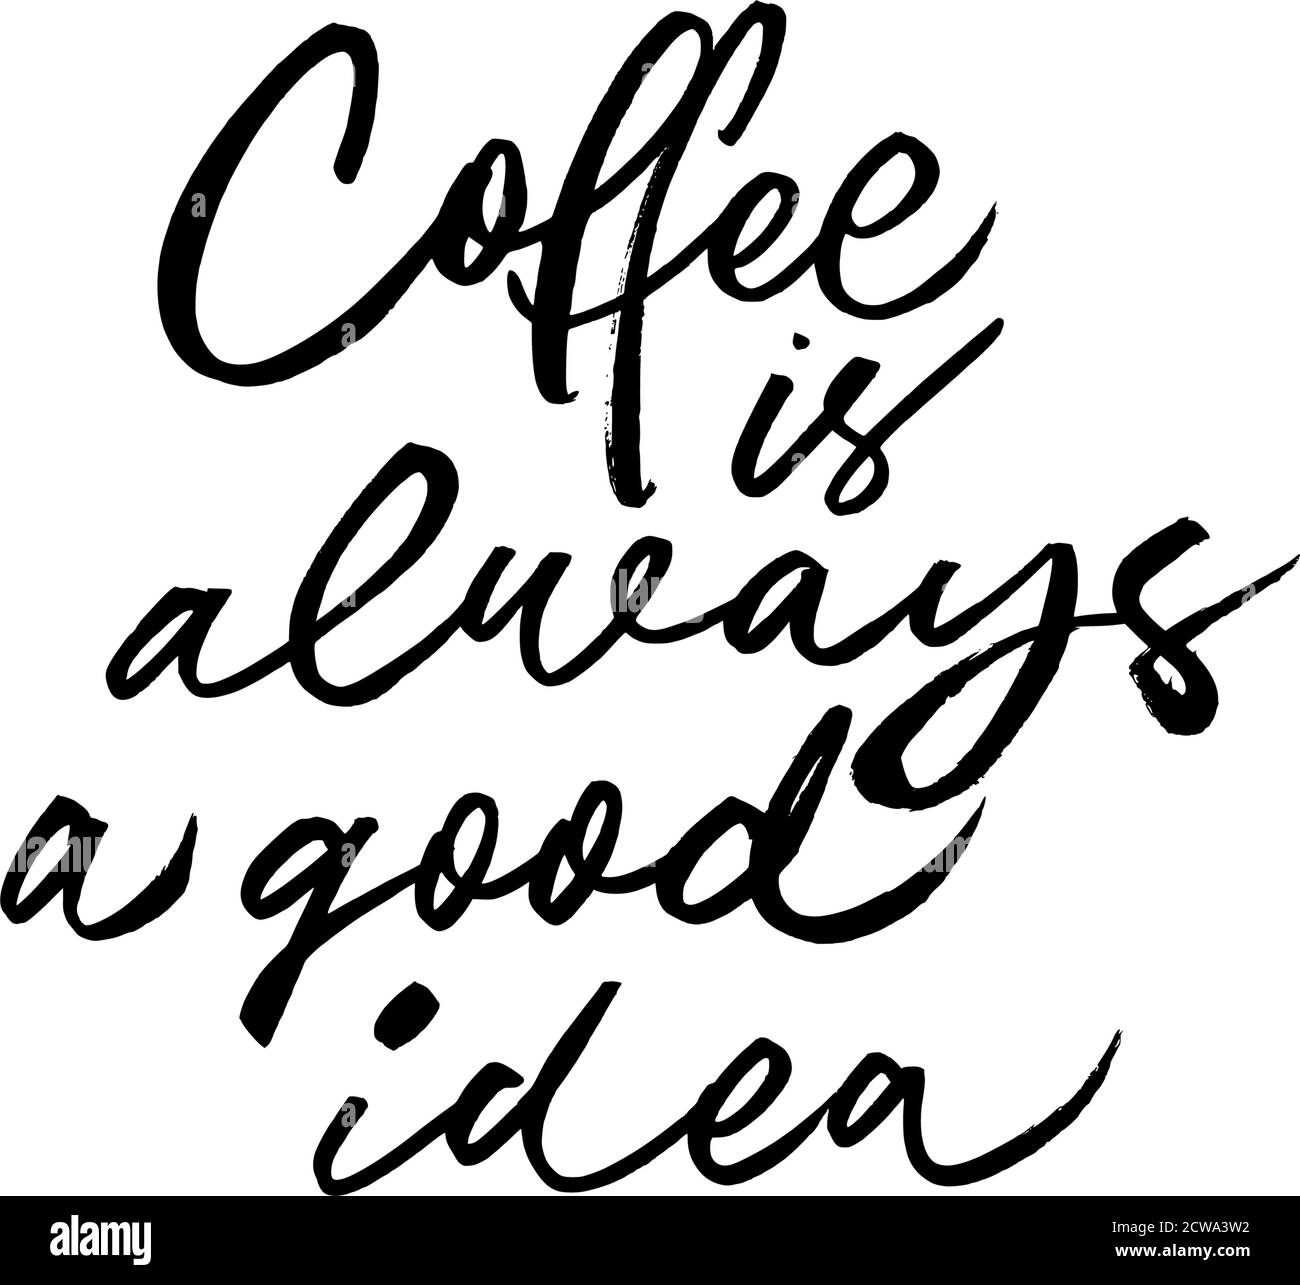 Coffee is always a good idea vector calligraphy.  Stock Vector